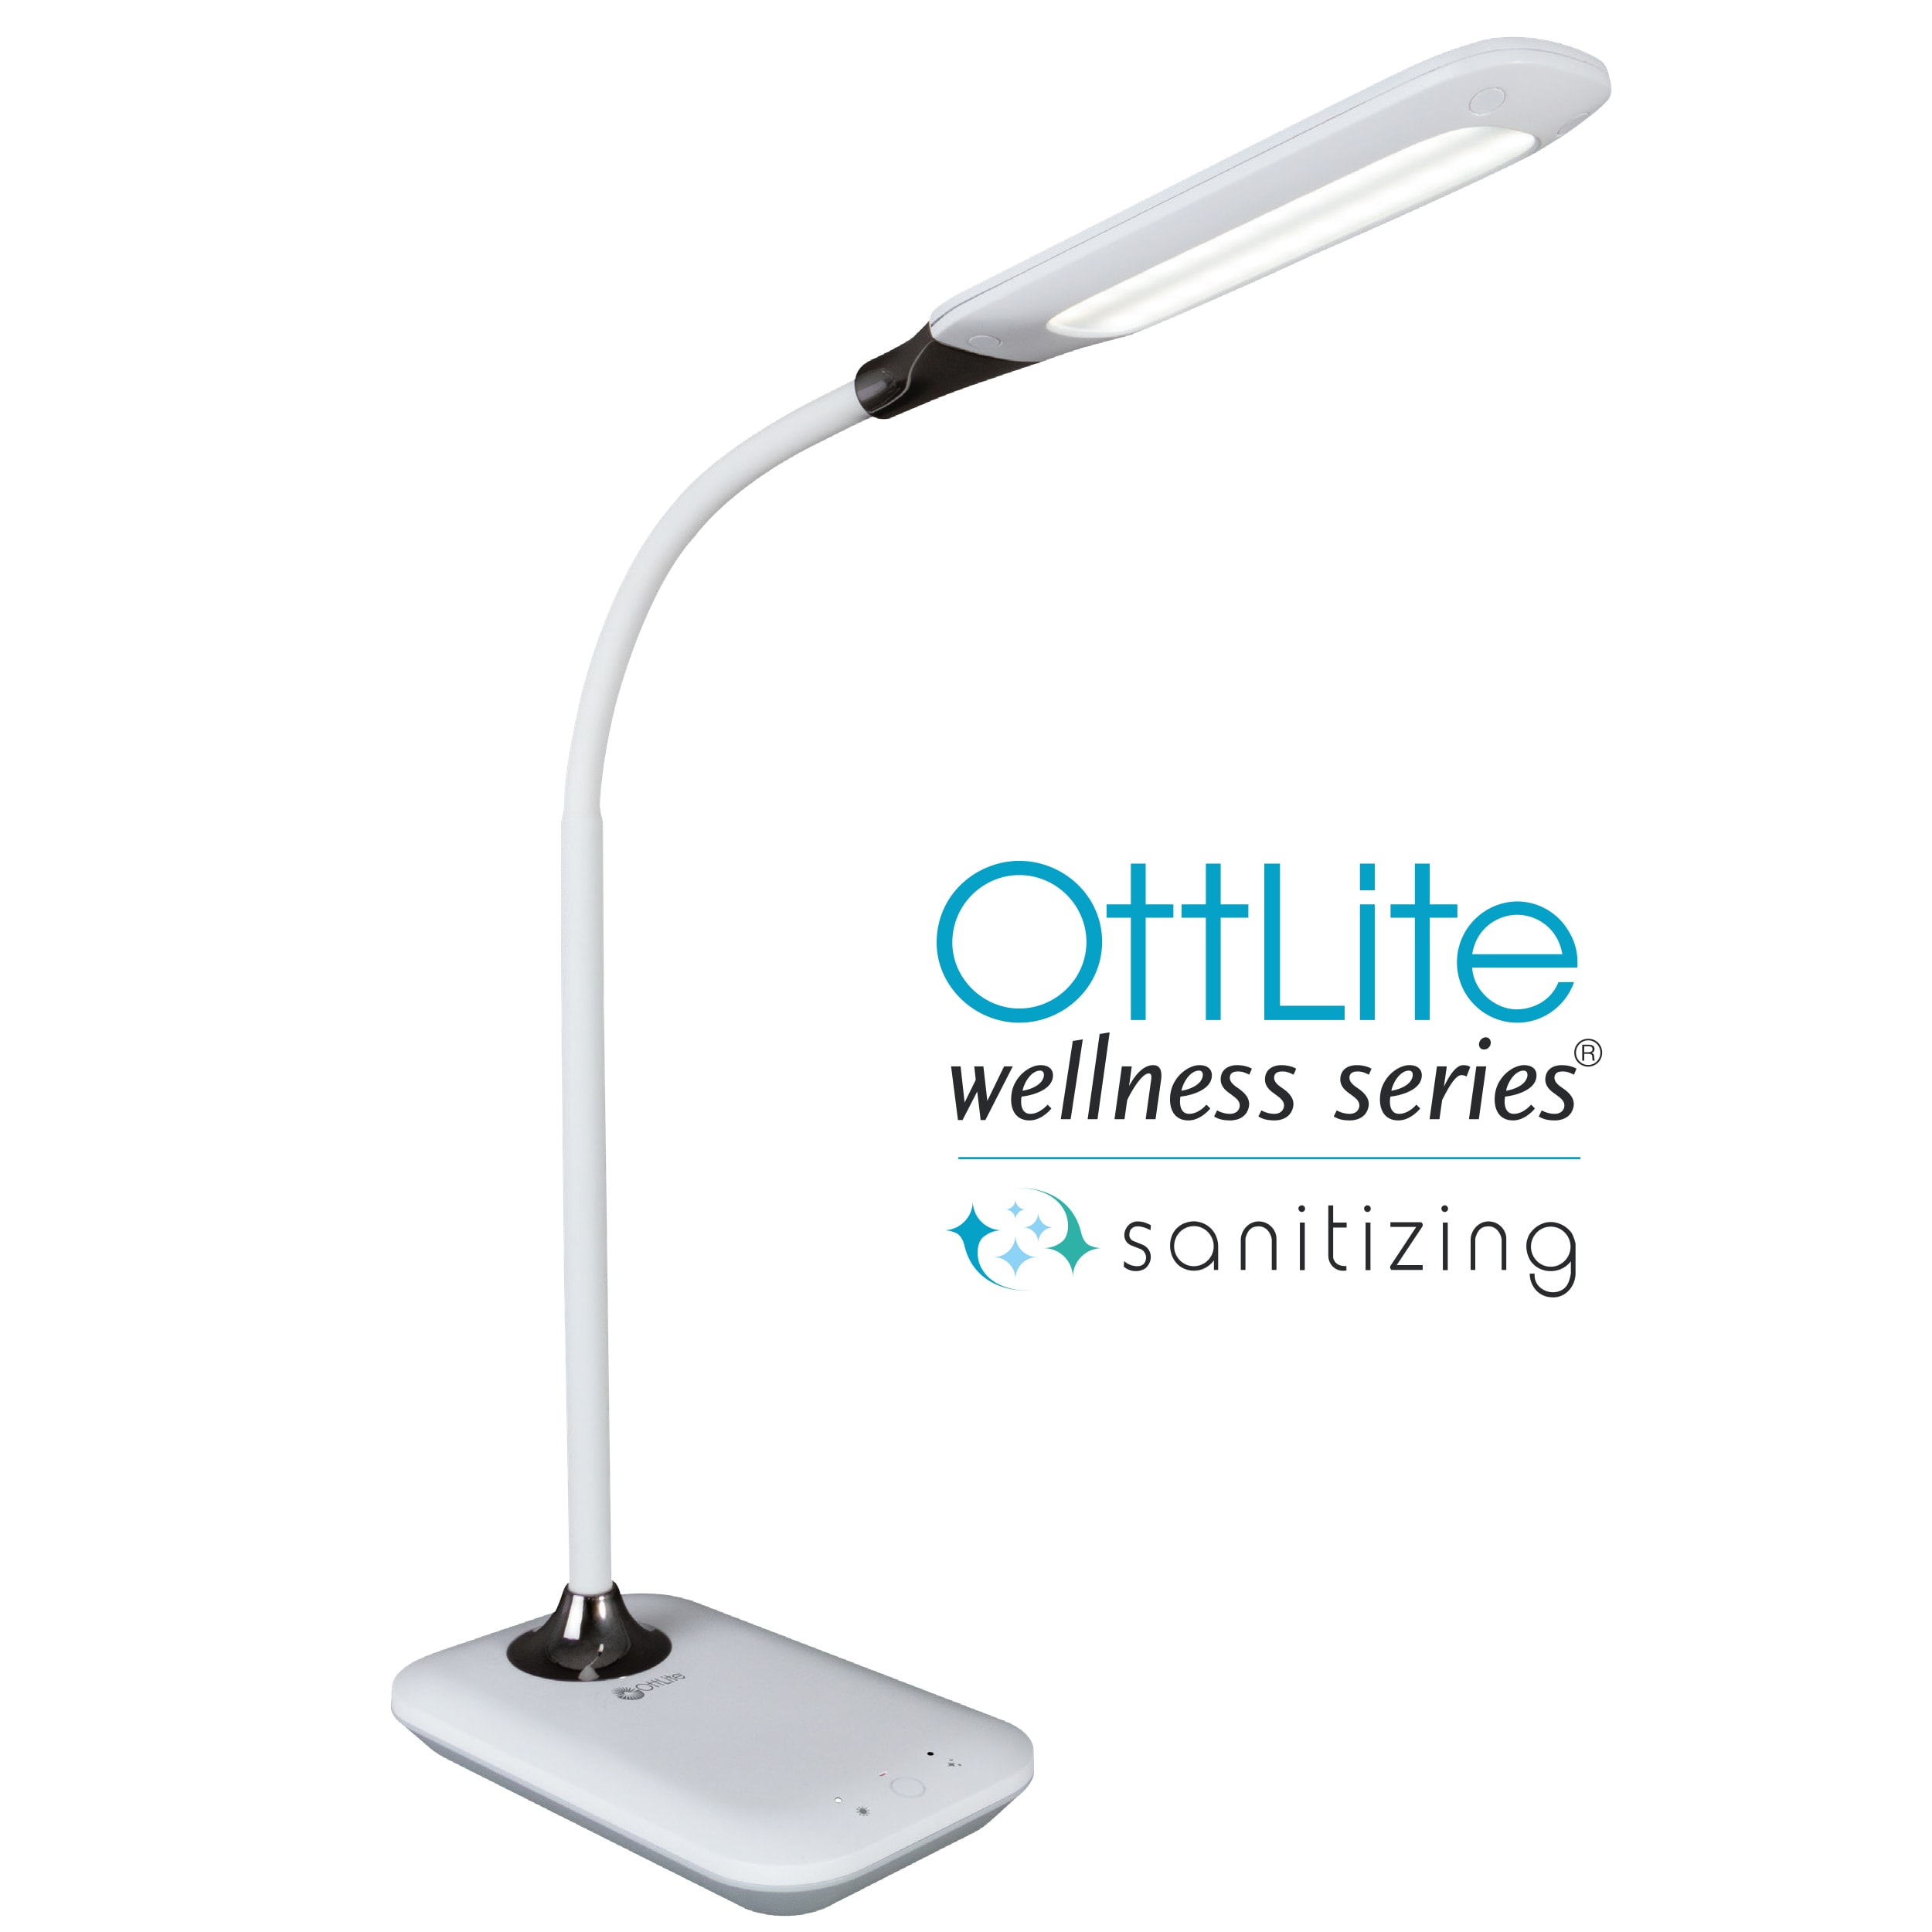 OttLite - Contact Us